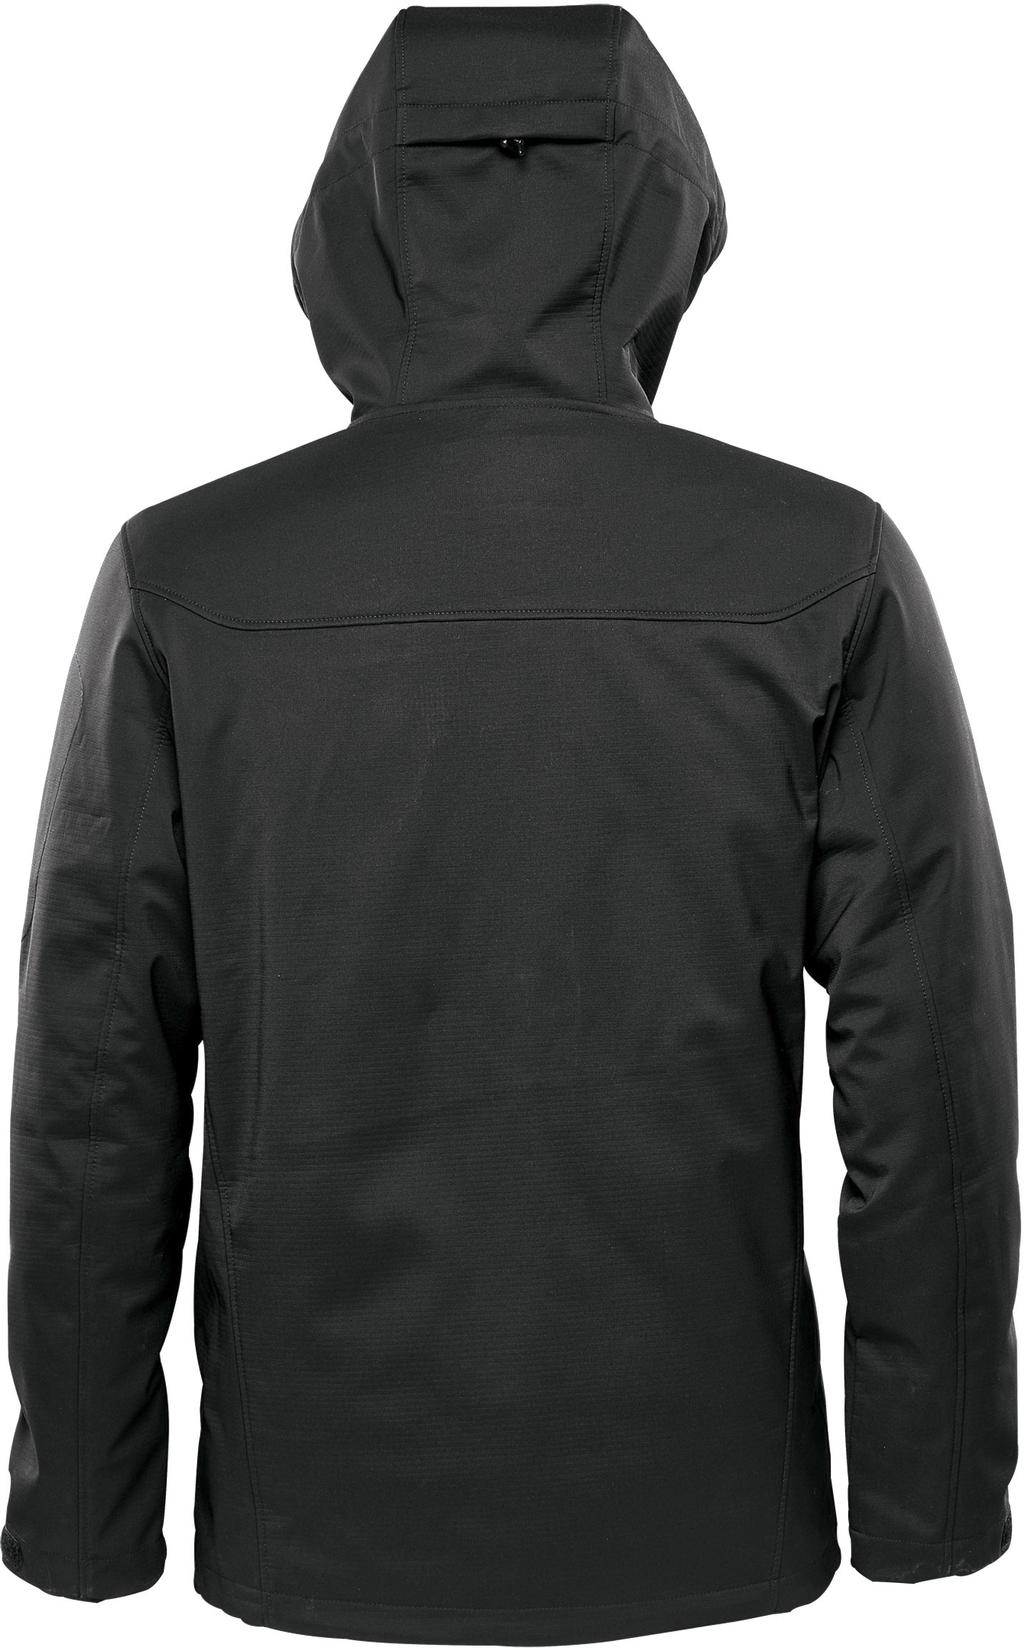  Epsilon System Jacket in Farbe Black